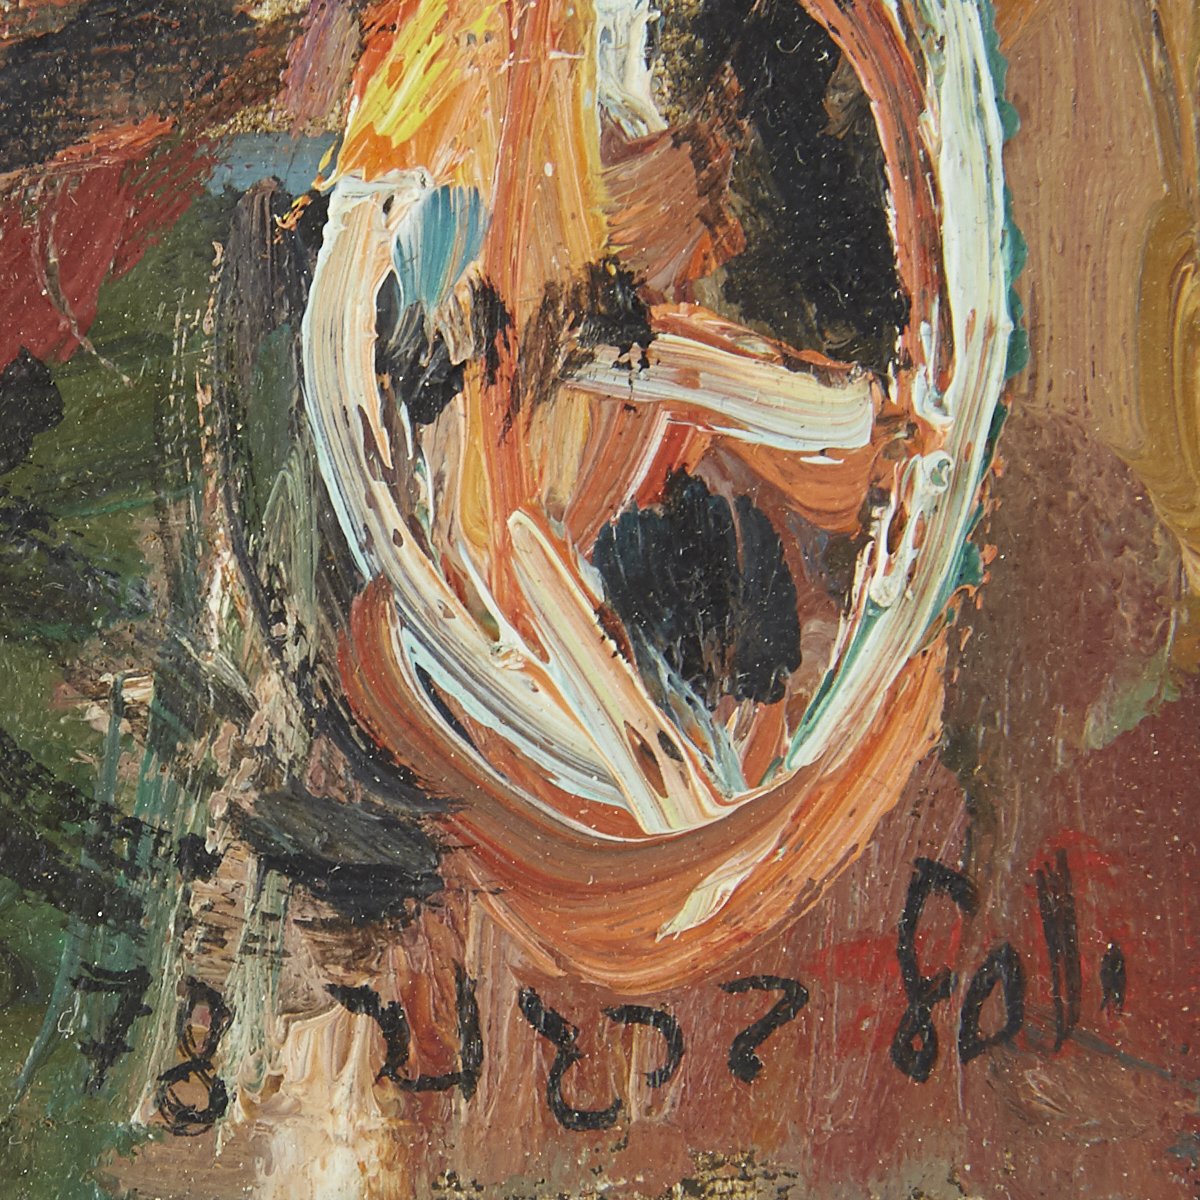 Yosl Bergner "White Jack on Wheels" Oil on Canvas - Image 3 of 5